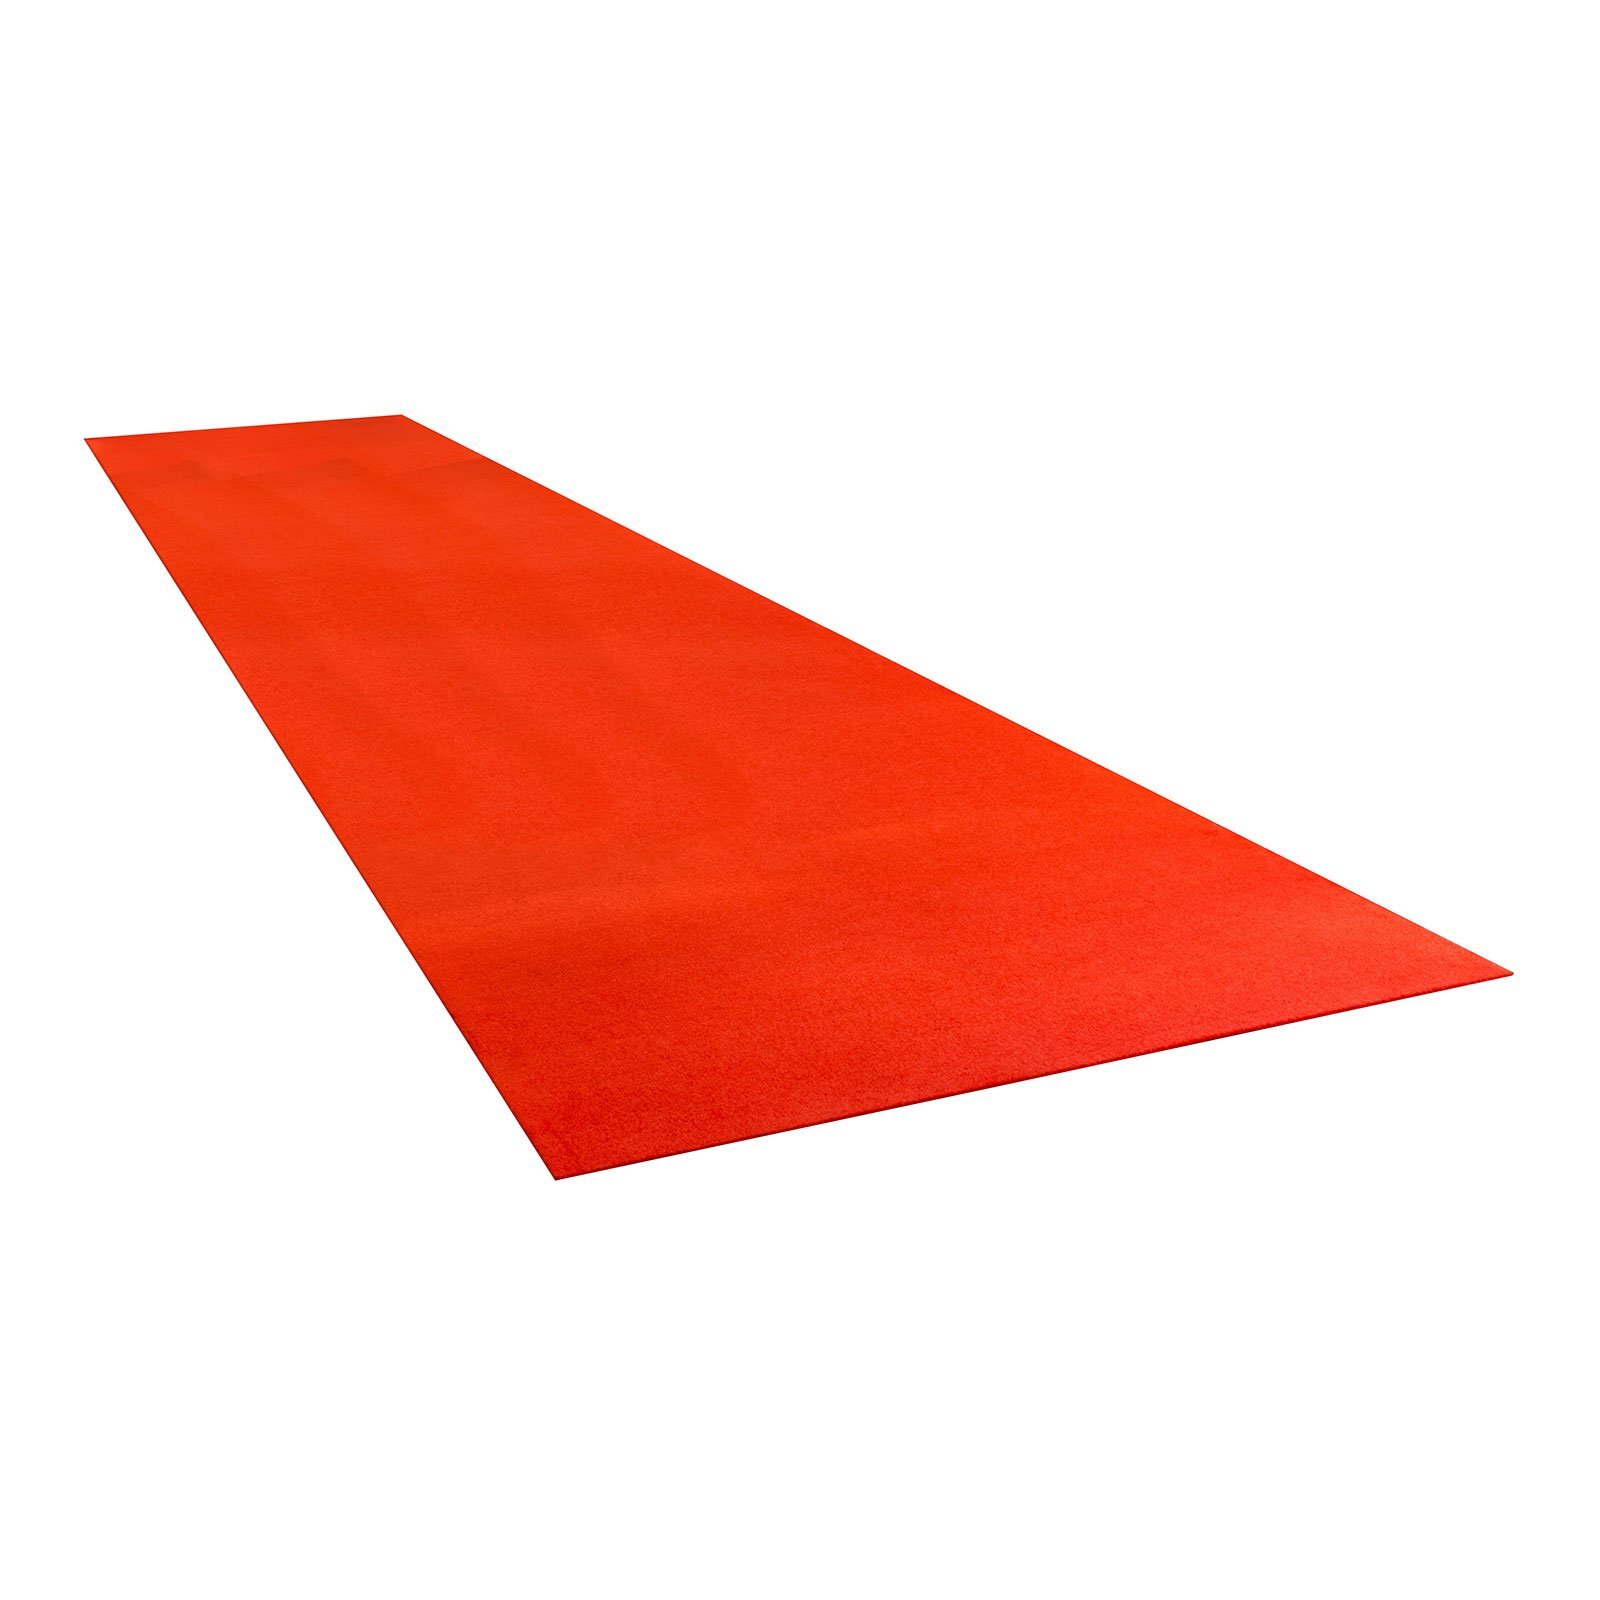 Matpro 1 x 3m Red Small Event Runner Prepack Carpet